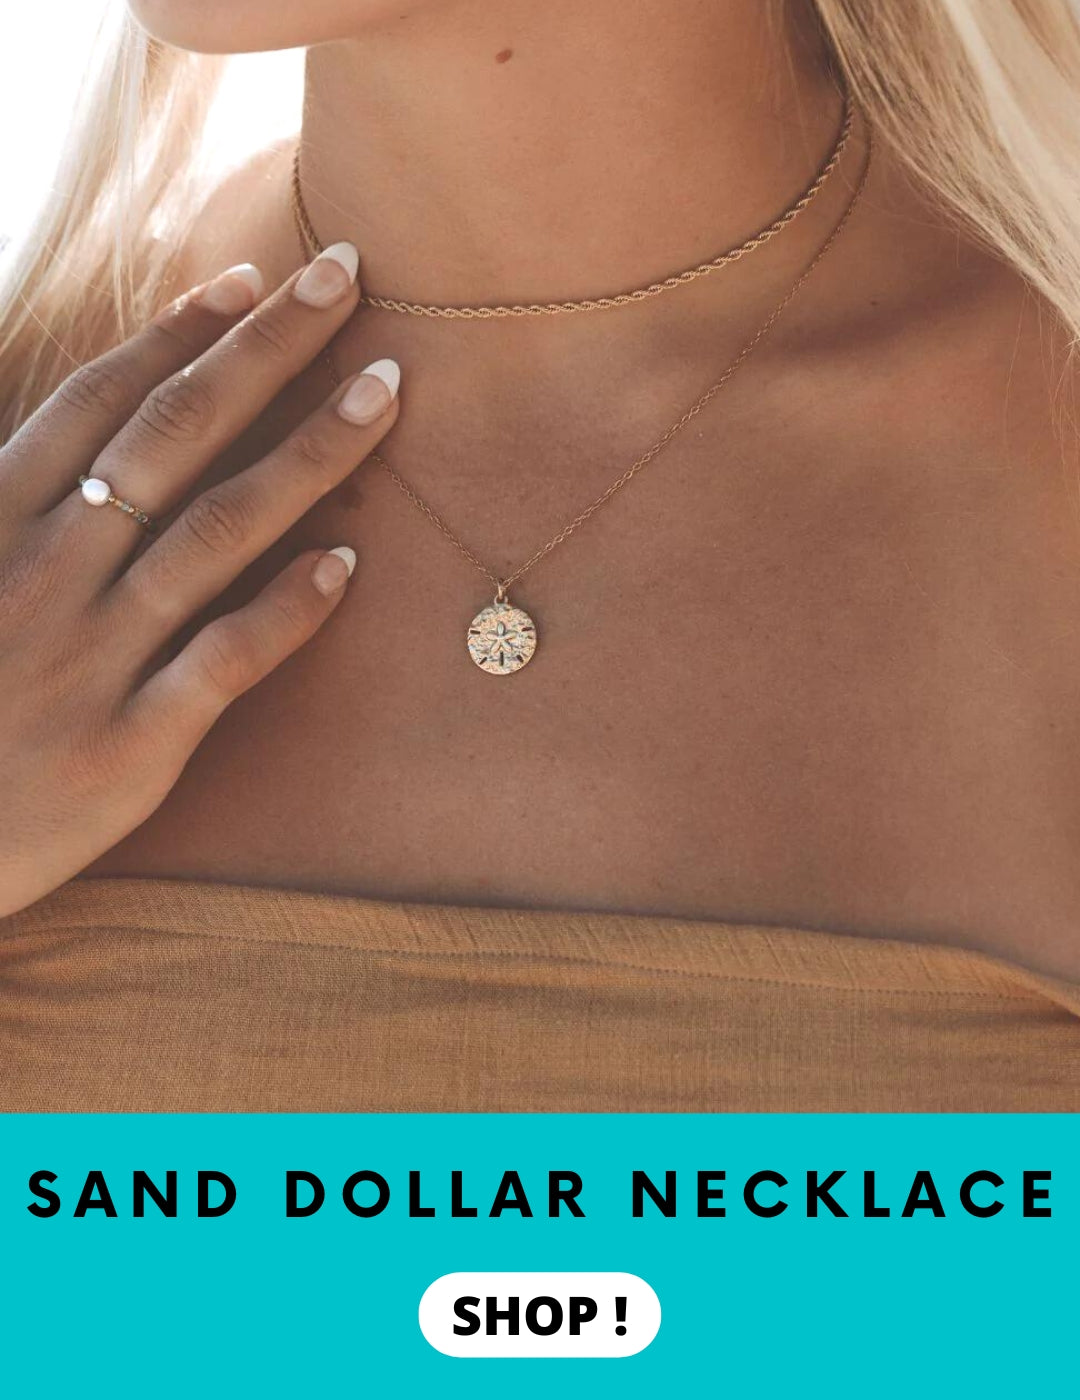 Sand dollar necklace waterproof jewelry